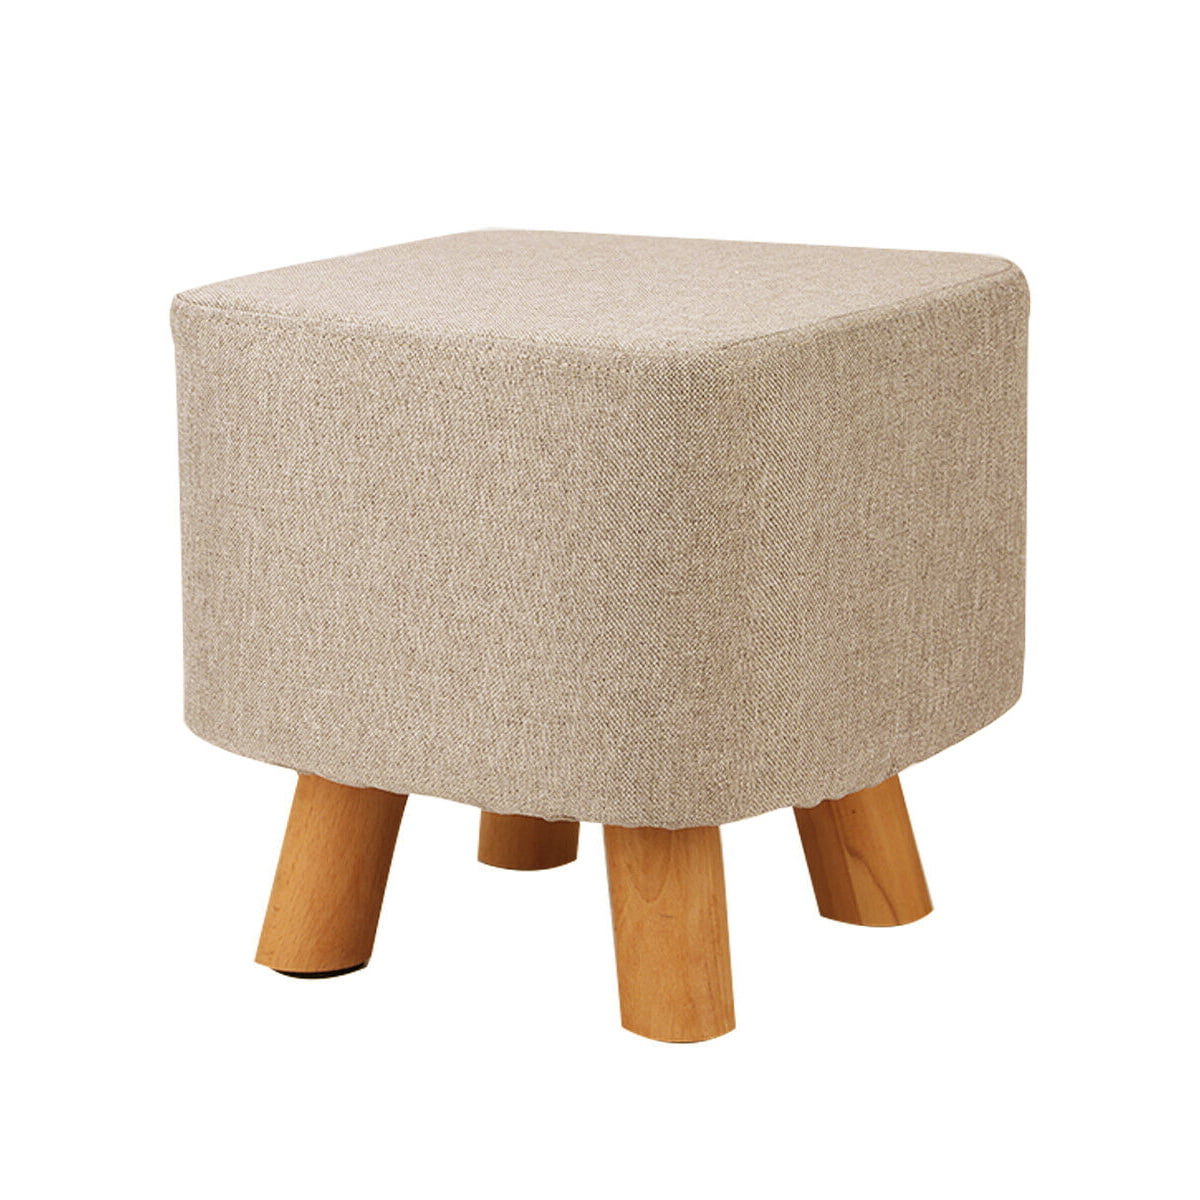 Wood Legs Fabric Rest Stool Footstool Chair Ottoman Rest Padded Top Pouffe Shape 